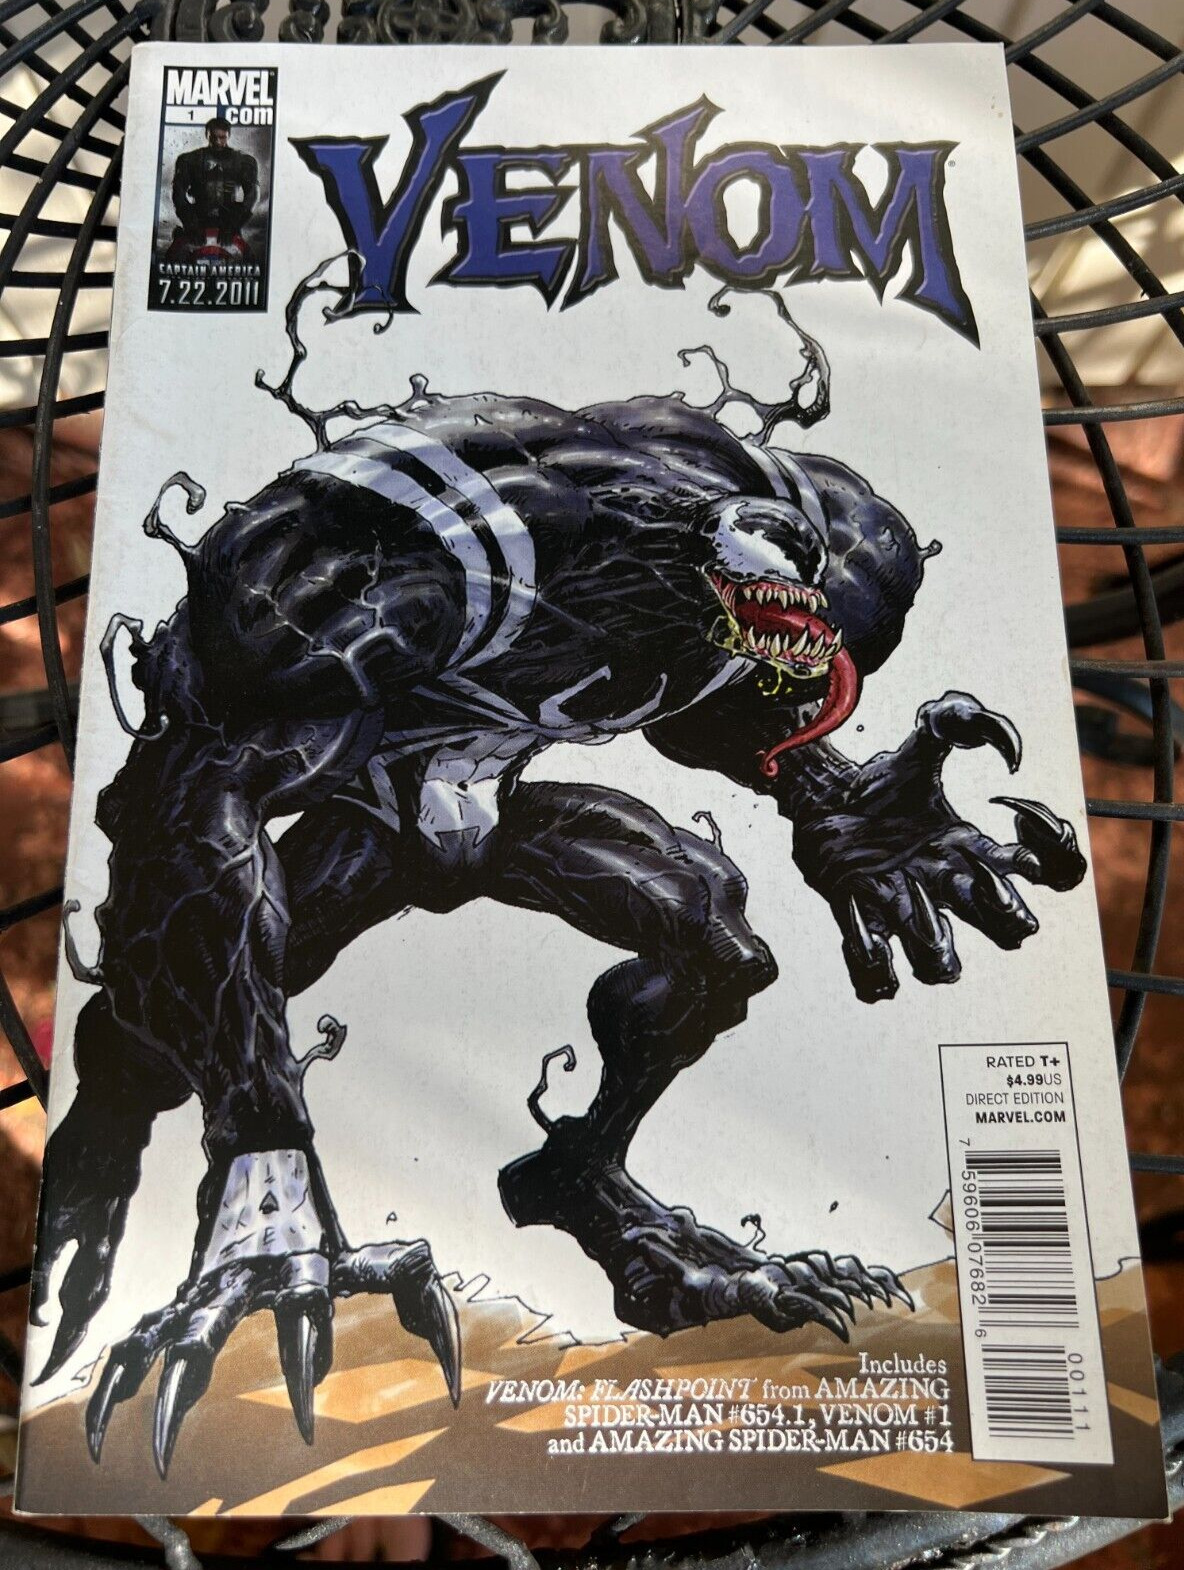 Venom: Flashpoint #1 Marvel Comic Direct Edition Captain America 7.22.2011